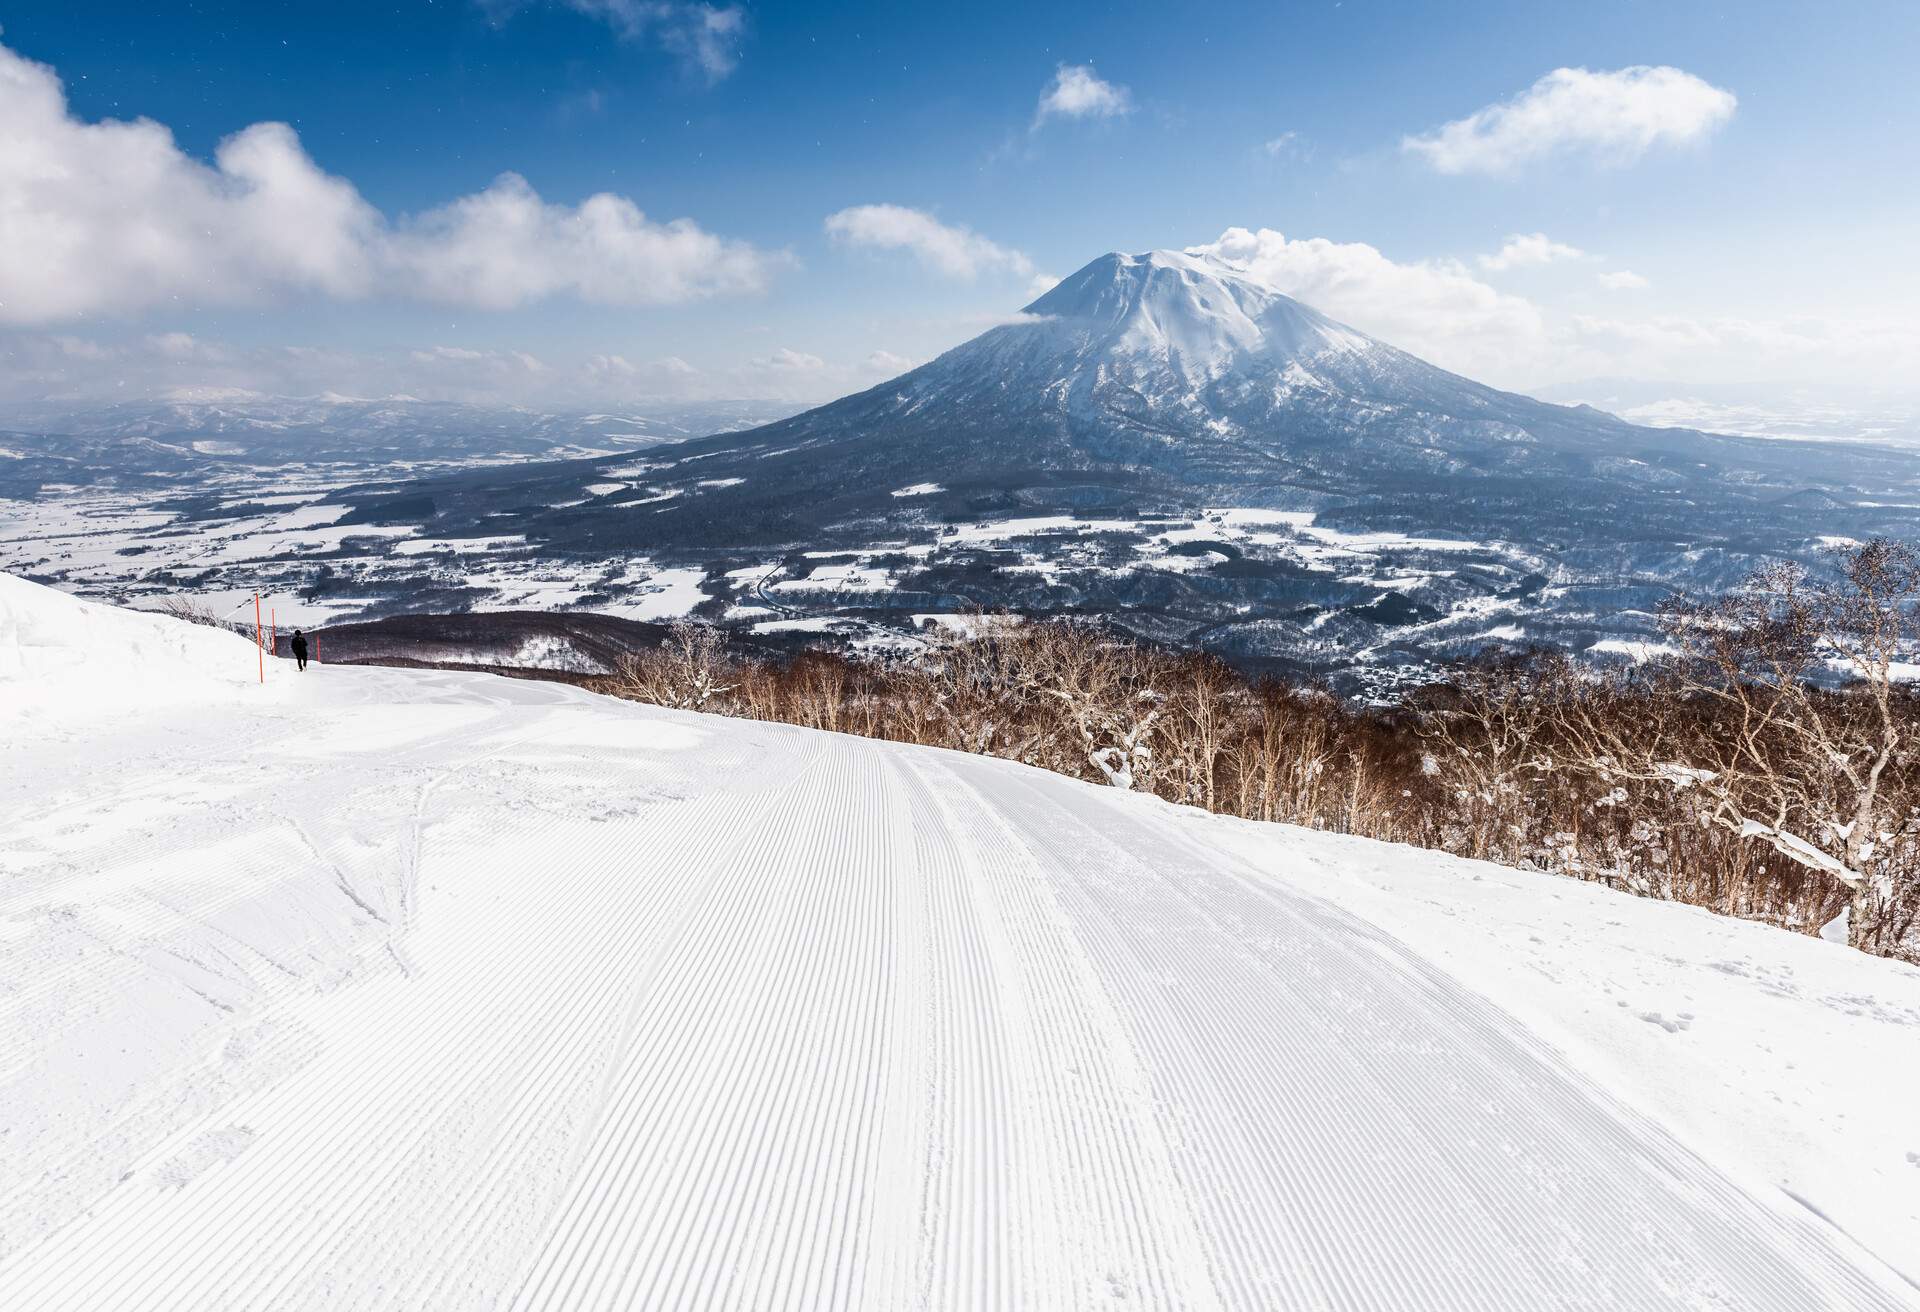 The ski cable car at Niseko Village Ski resort in Hokkaido Japan on a clear sunny day. Niseko is one of Hokkaido's most popular ski resorts. The dormant volcano of Mt Yotei dominates the background.